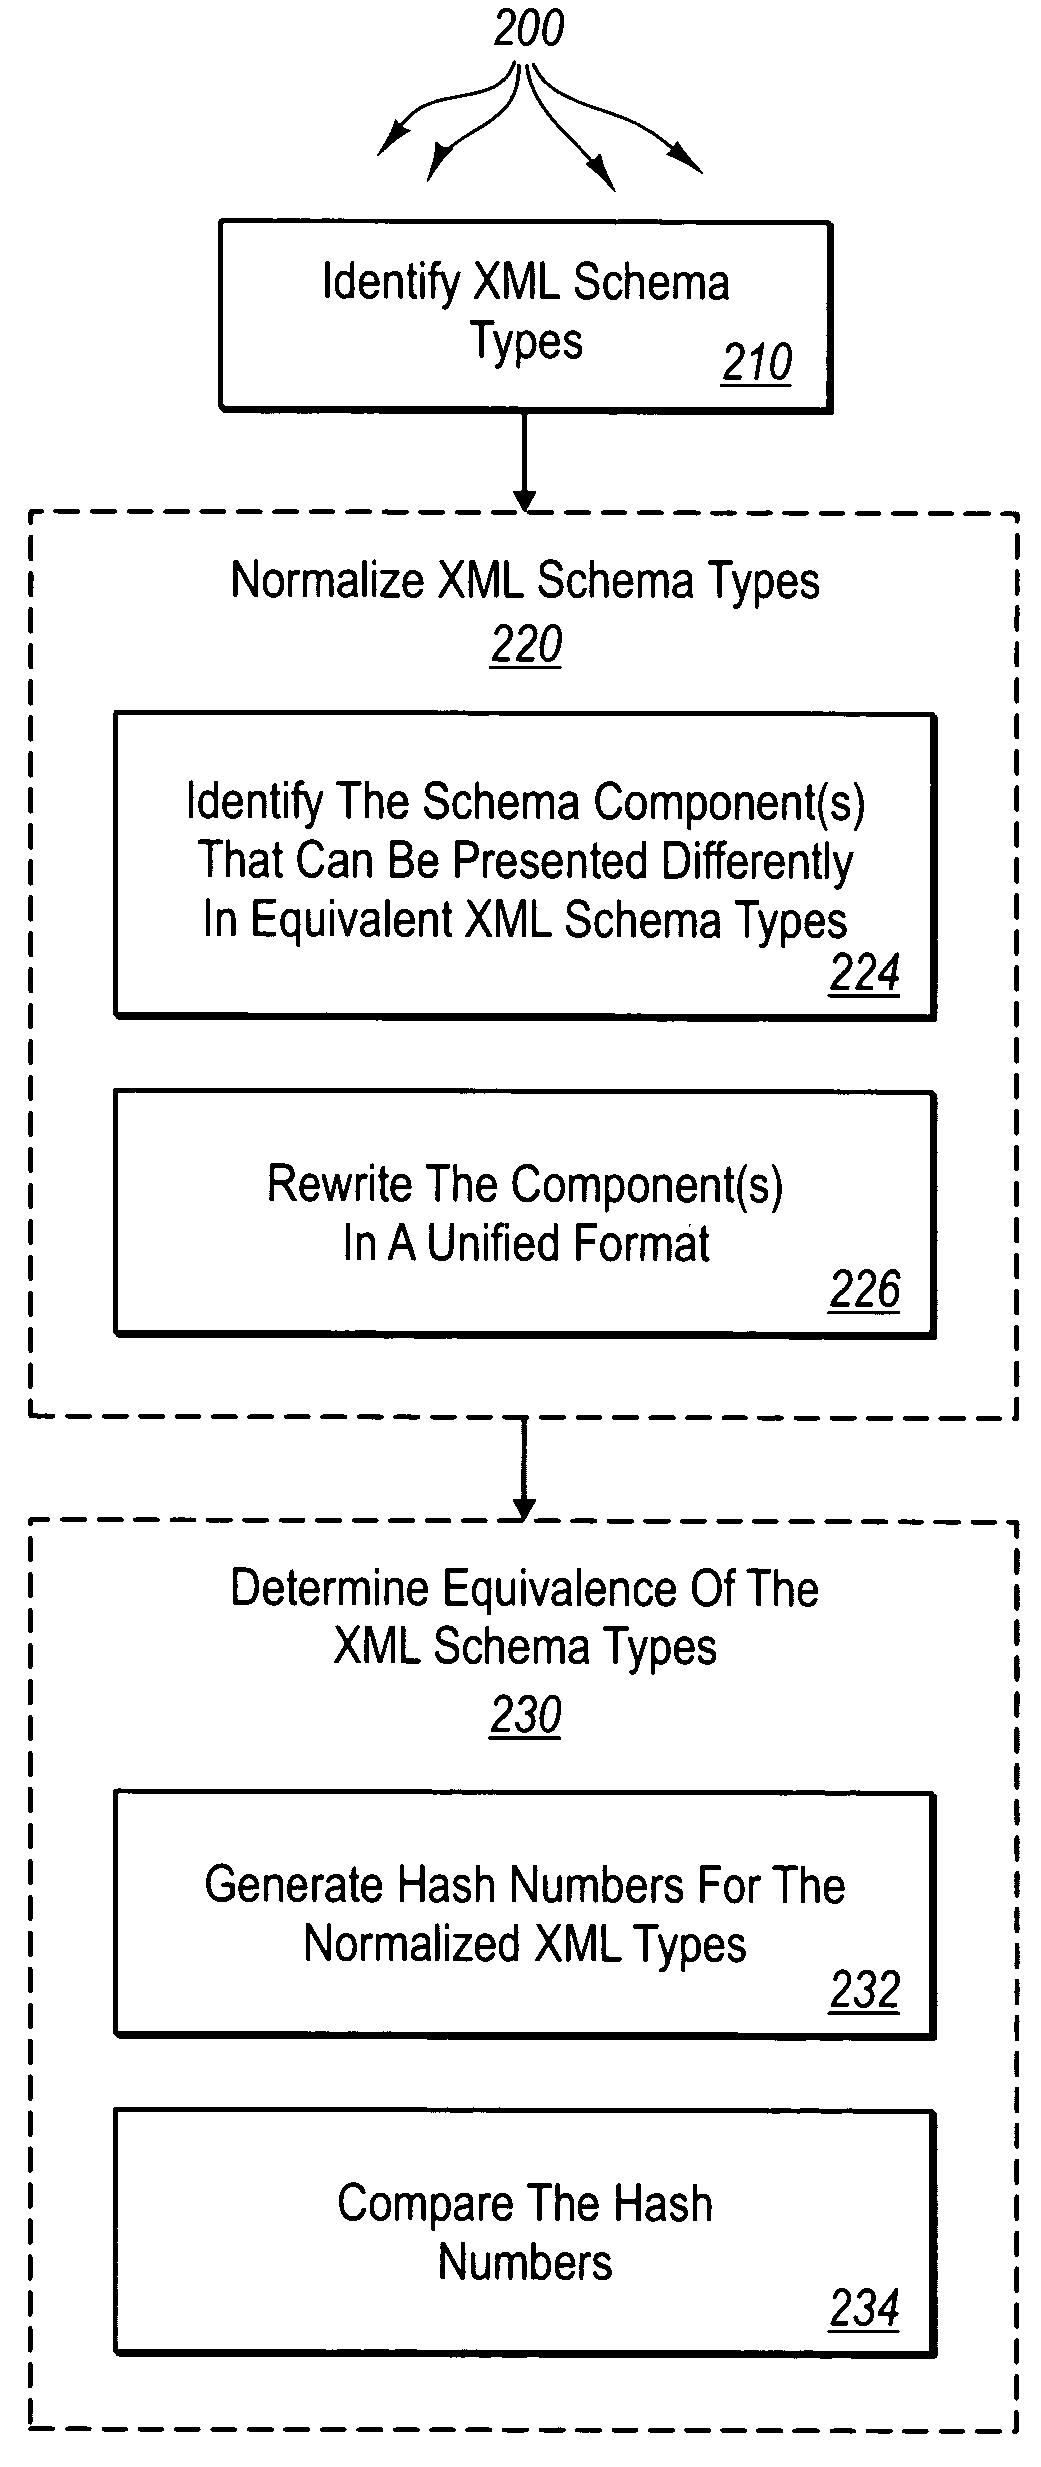 Determining XML schema type equivalence